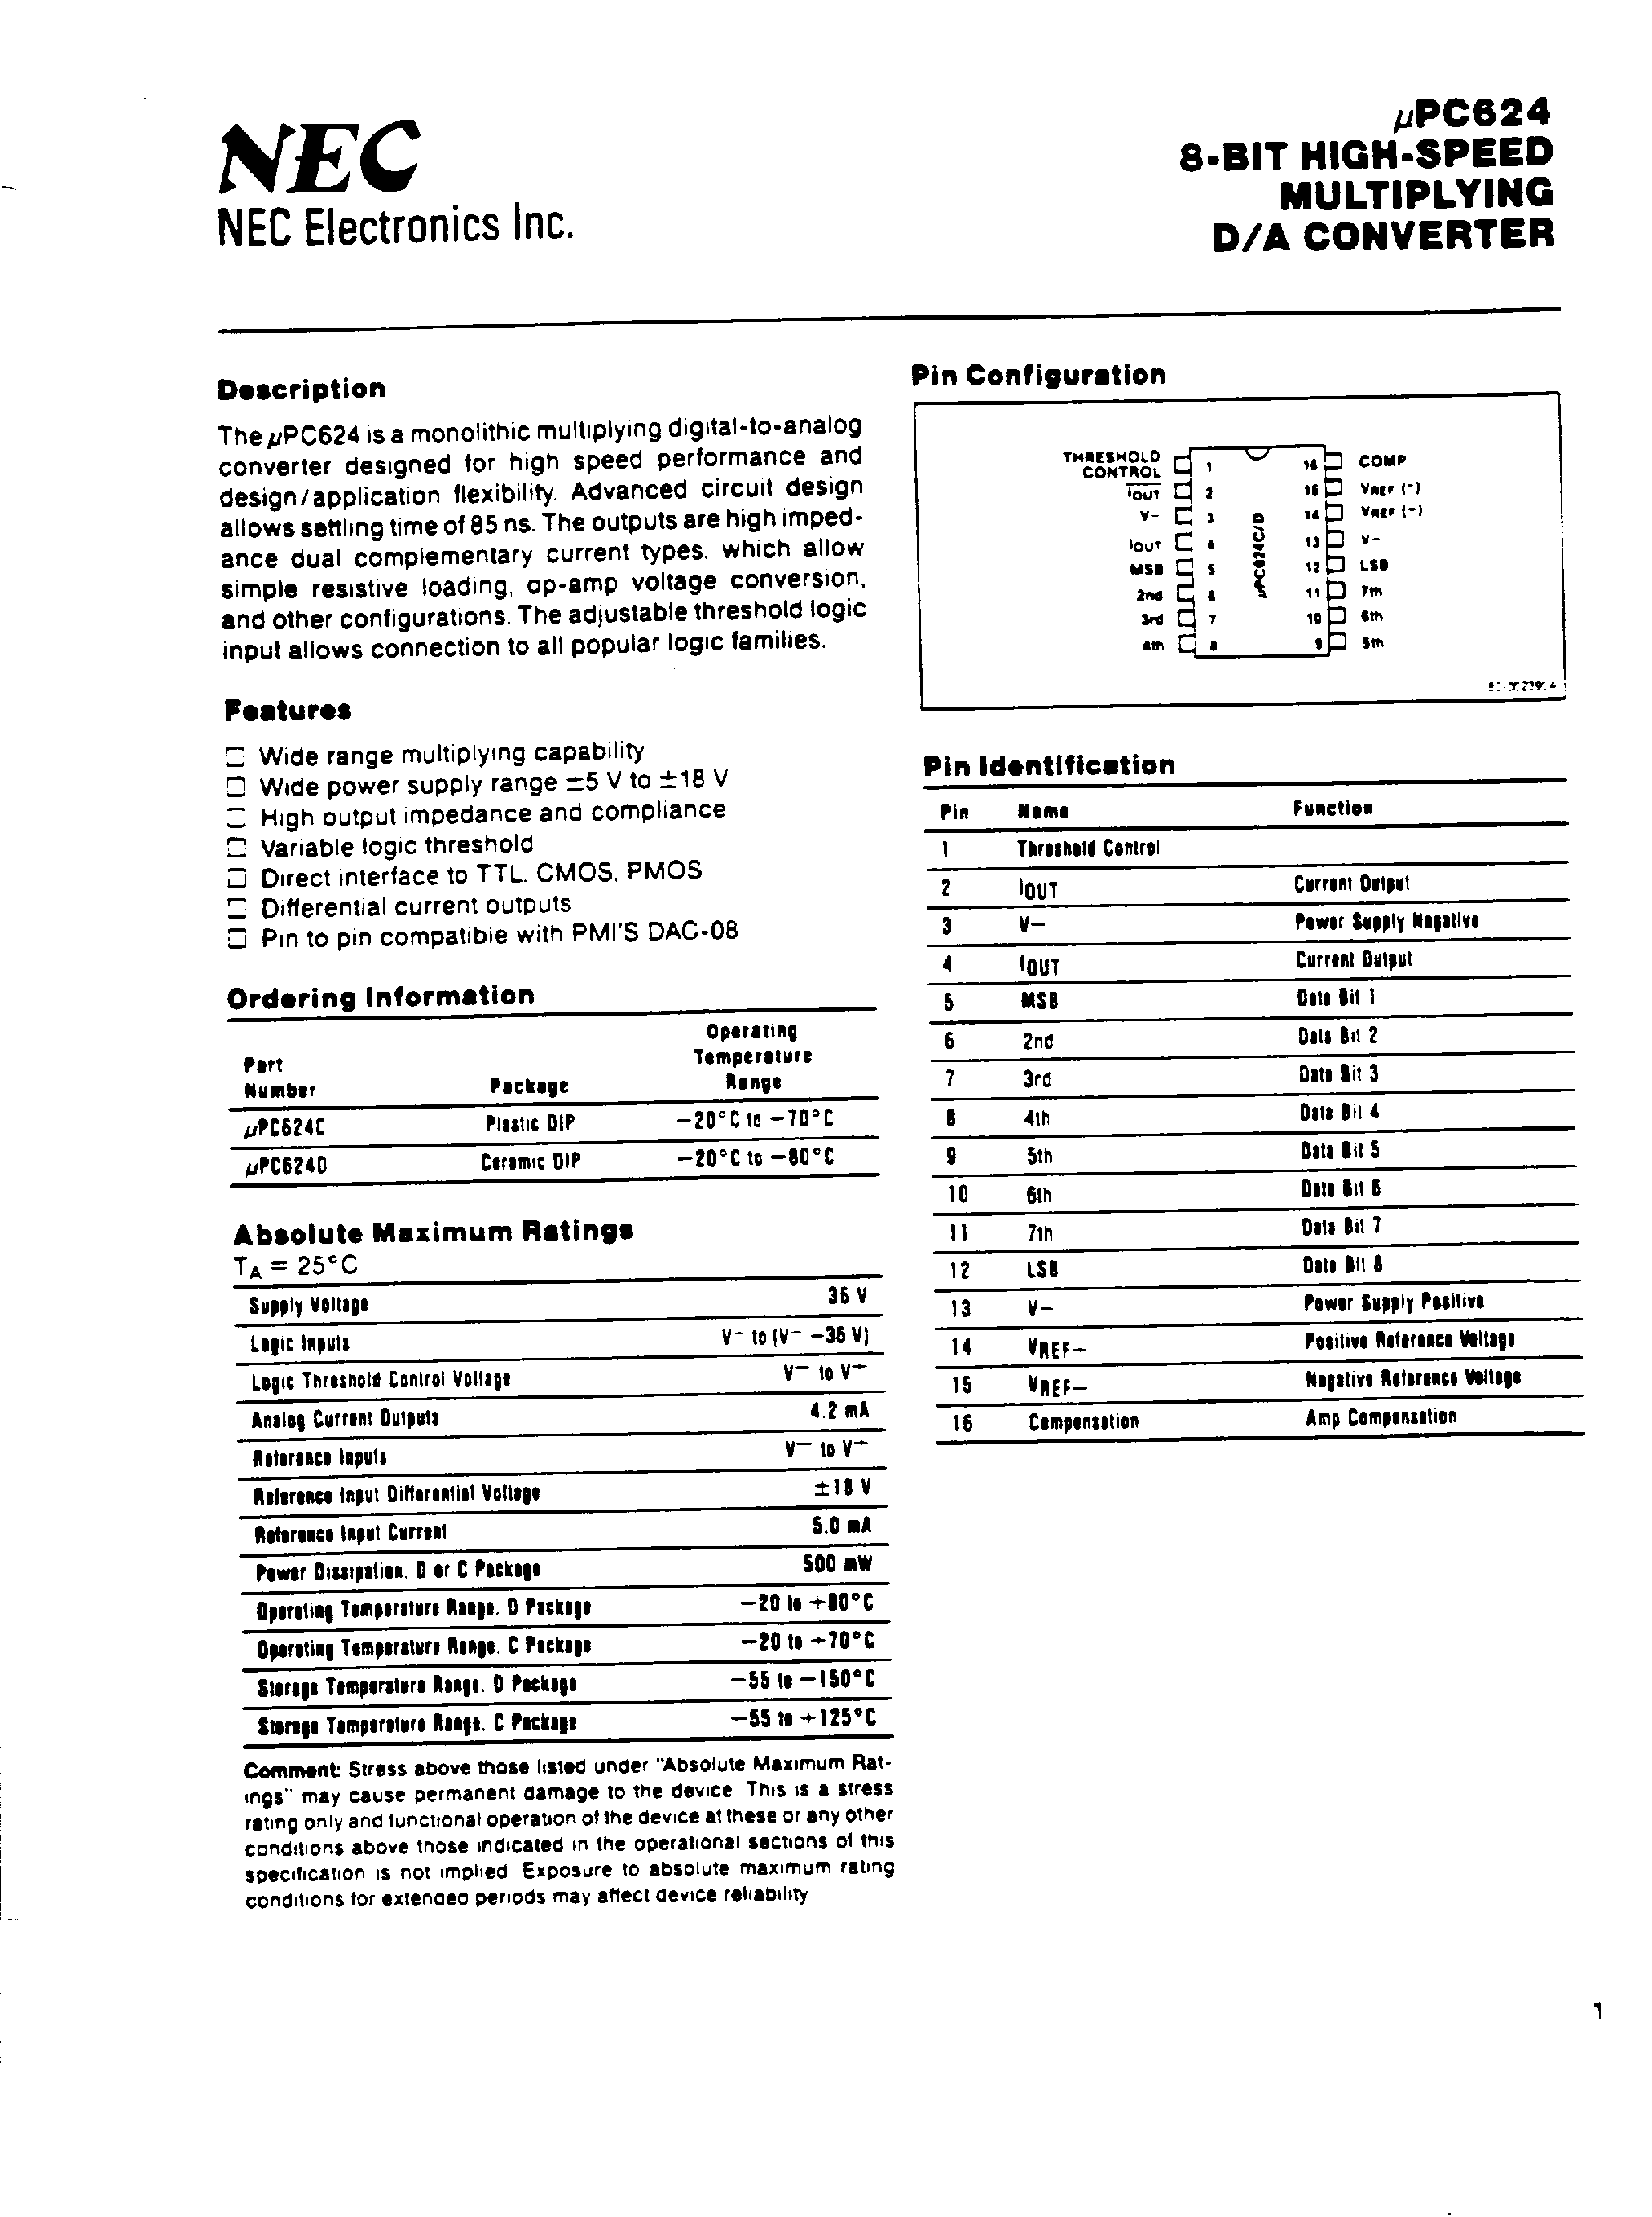 Datasheet UPC624 - 8-Bit High Speed Multiplying D/A Converter page 1